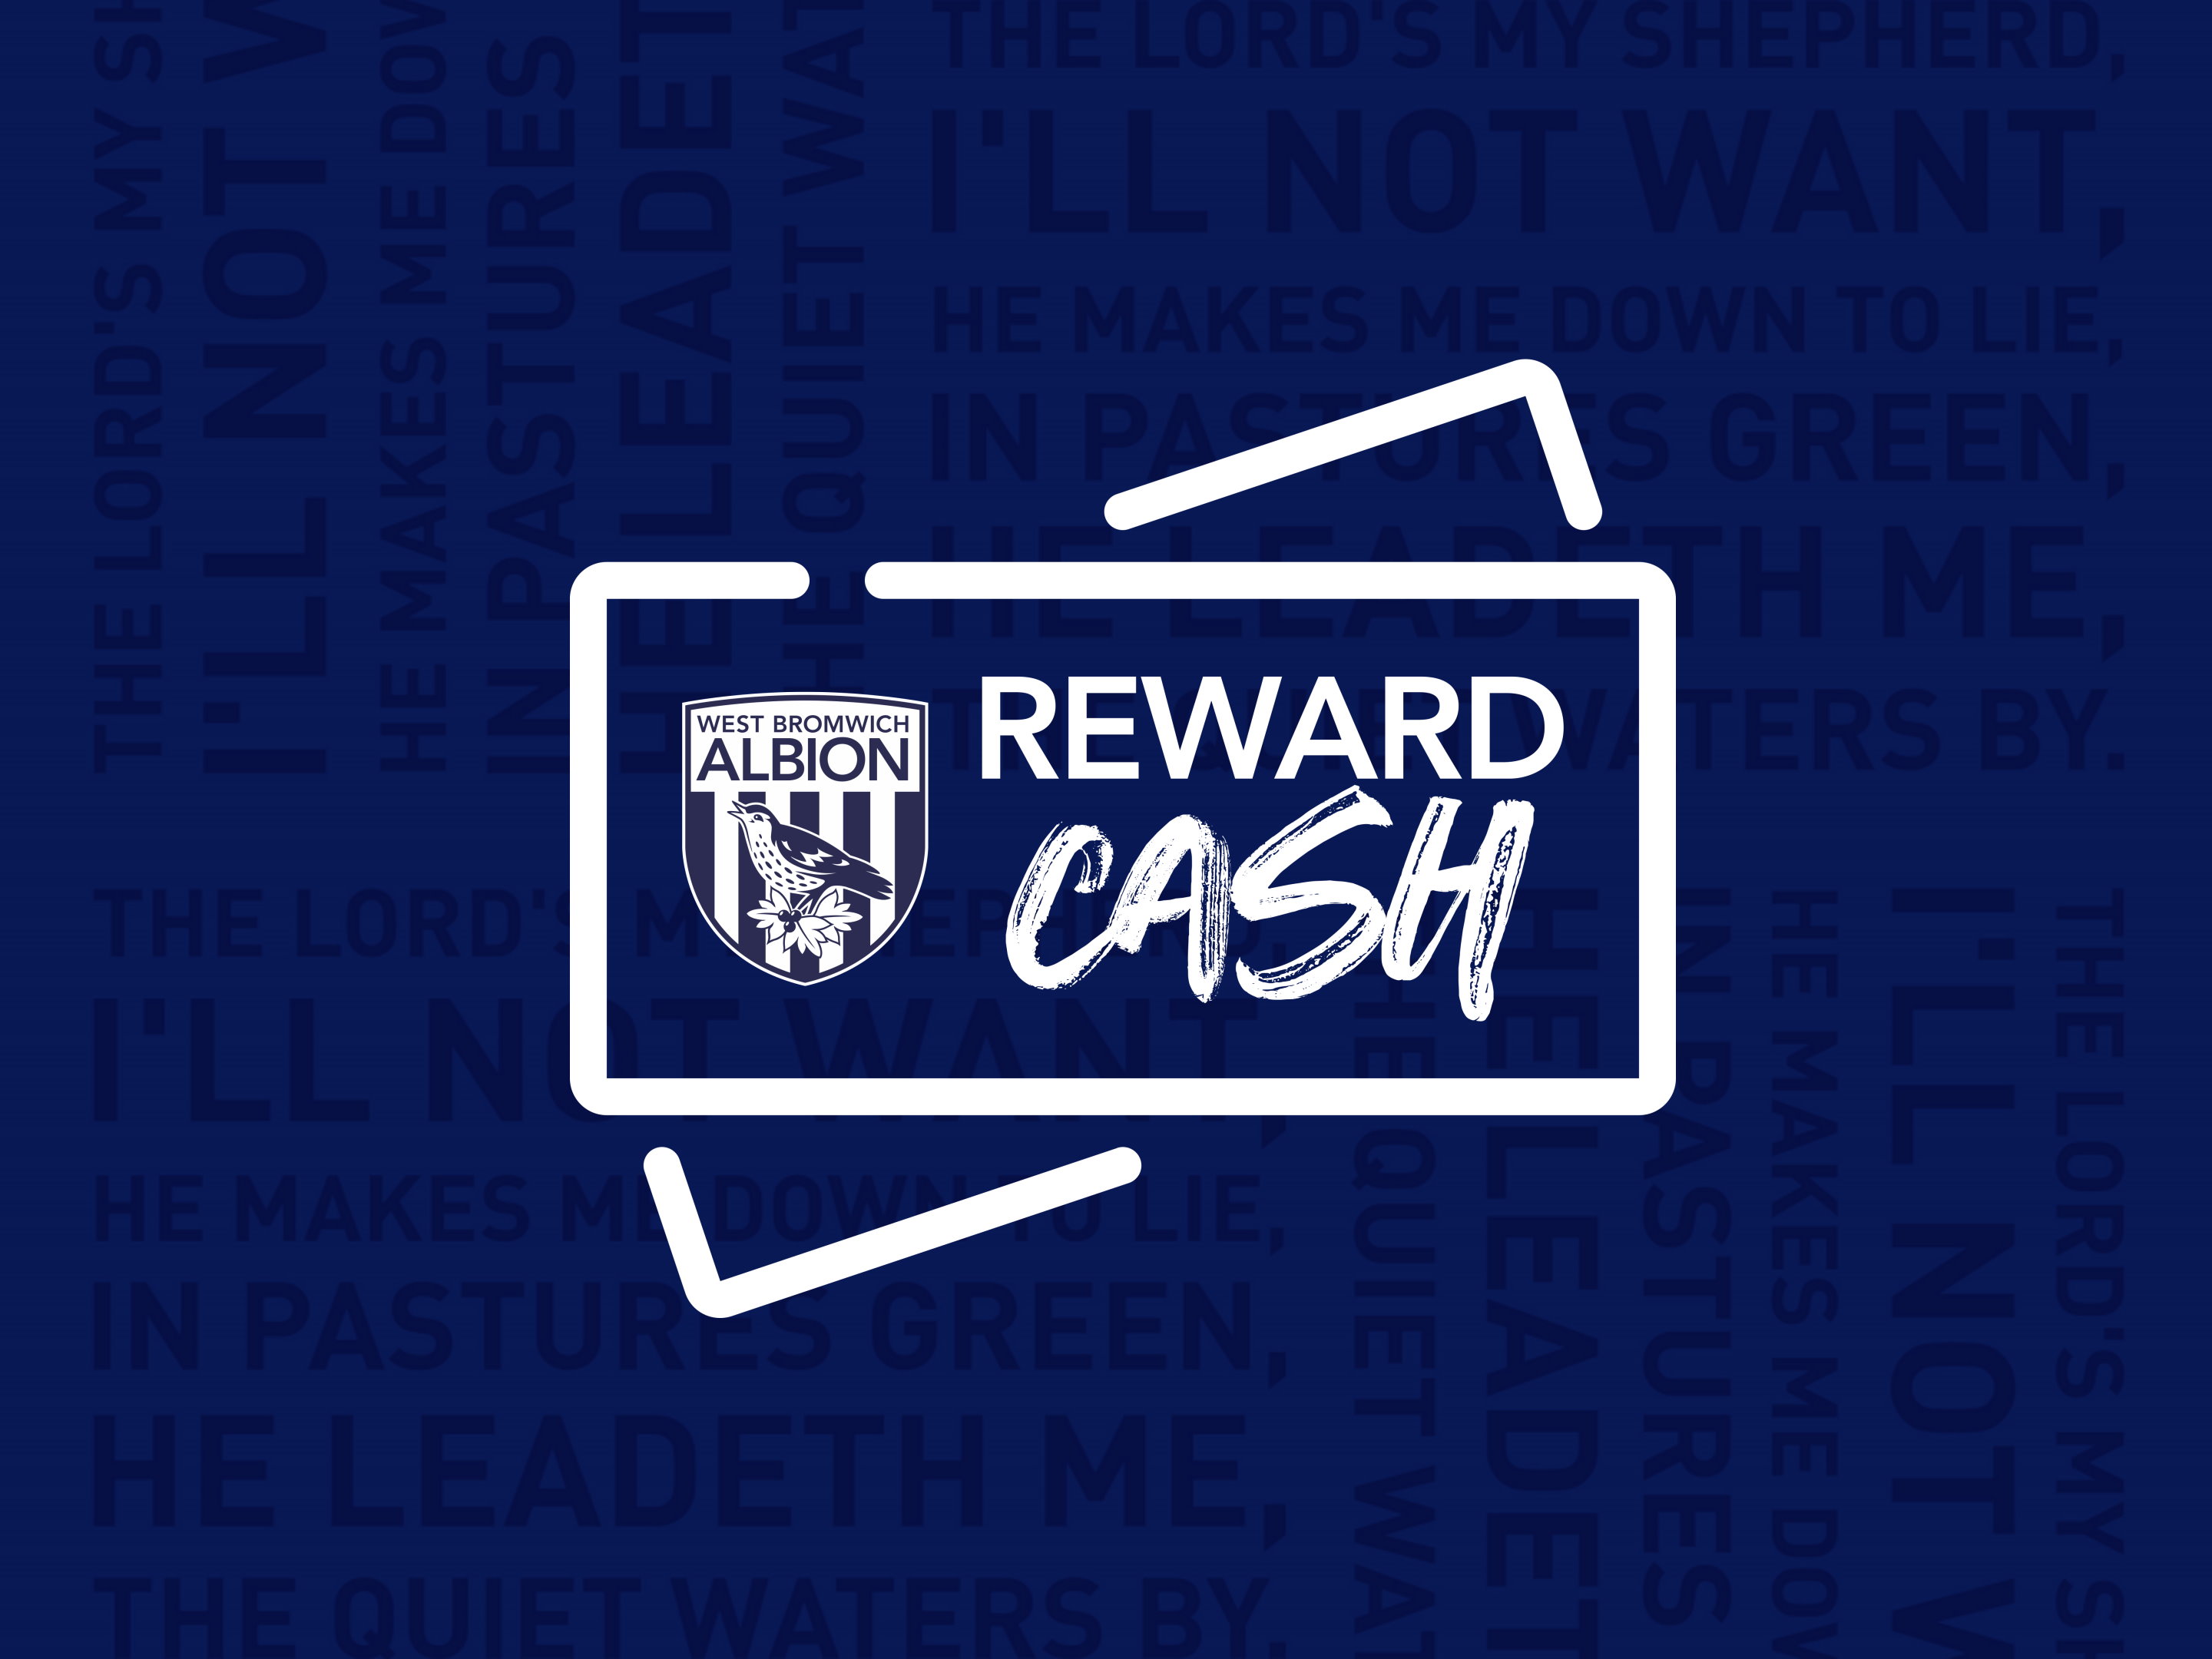 Albion Reward Cash